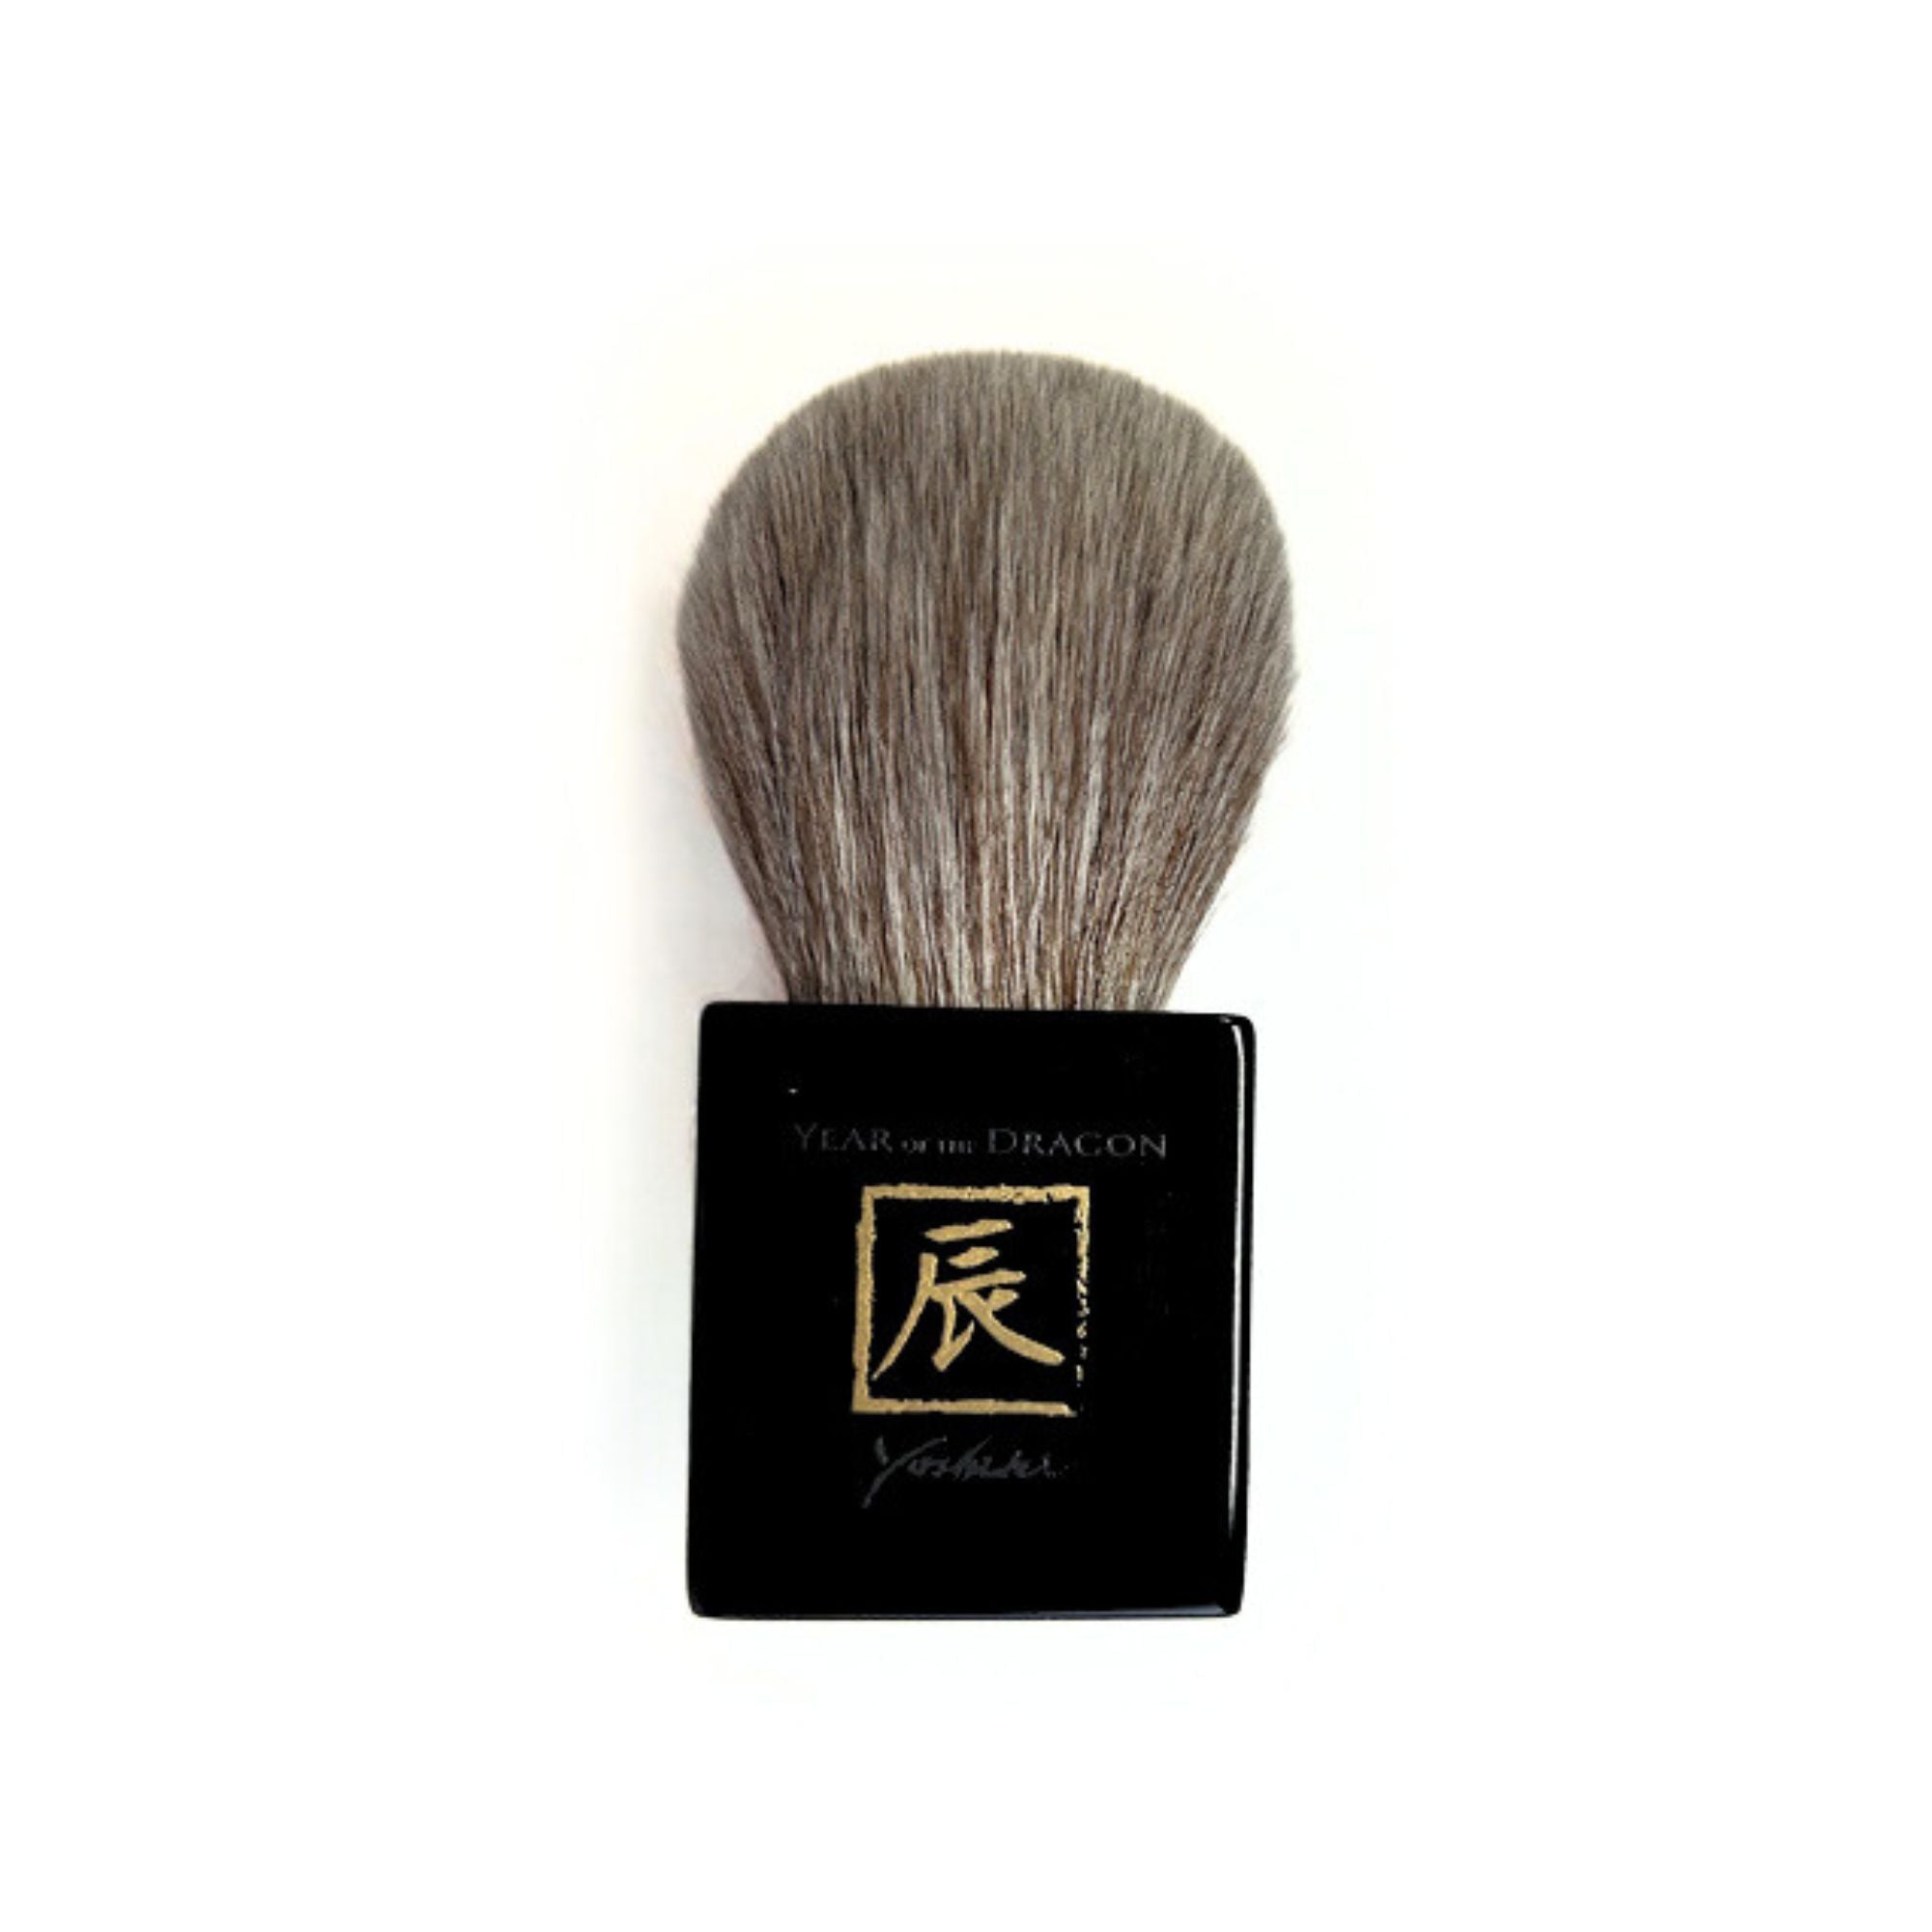 Koyudo Year of the Dragon Kabuki Brush 2024, Yoshiki Series (SG) - Fude Beauty, Japanese Makeup Brushes